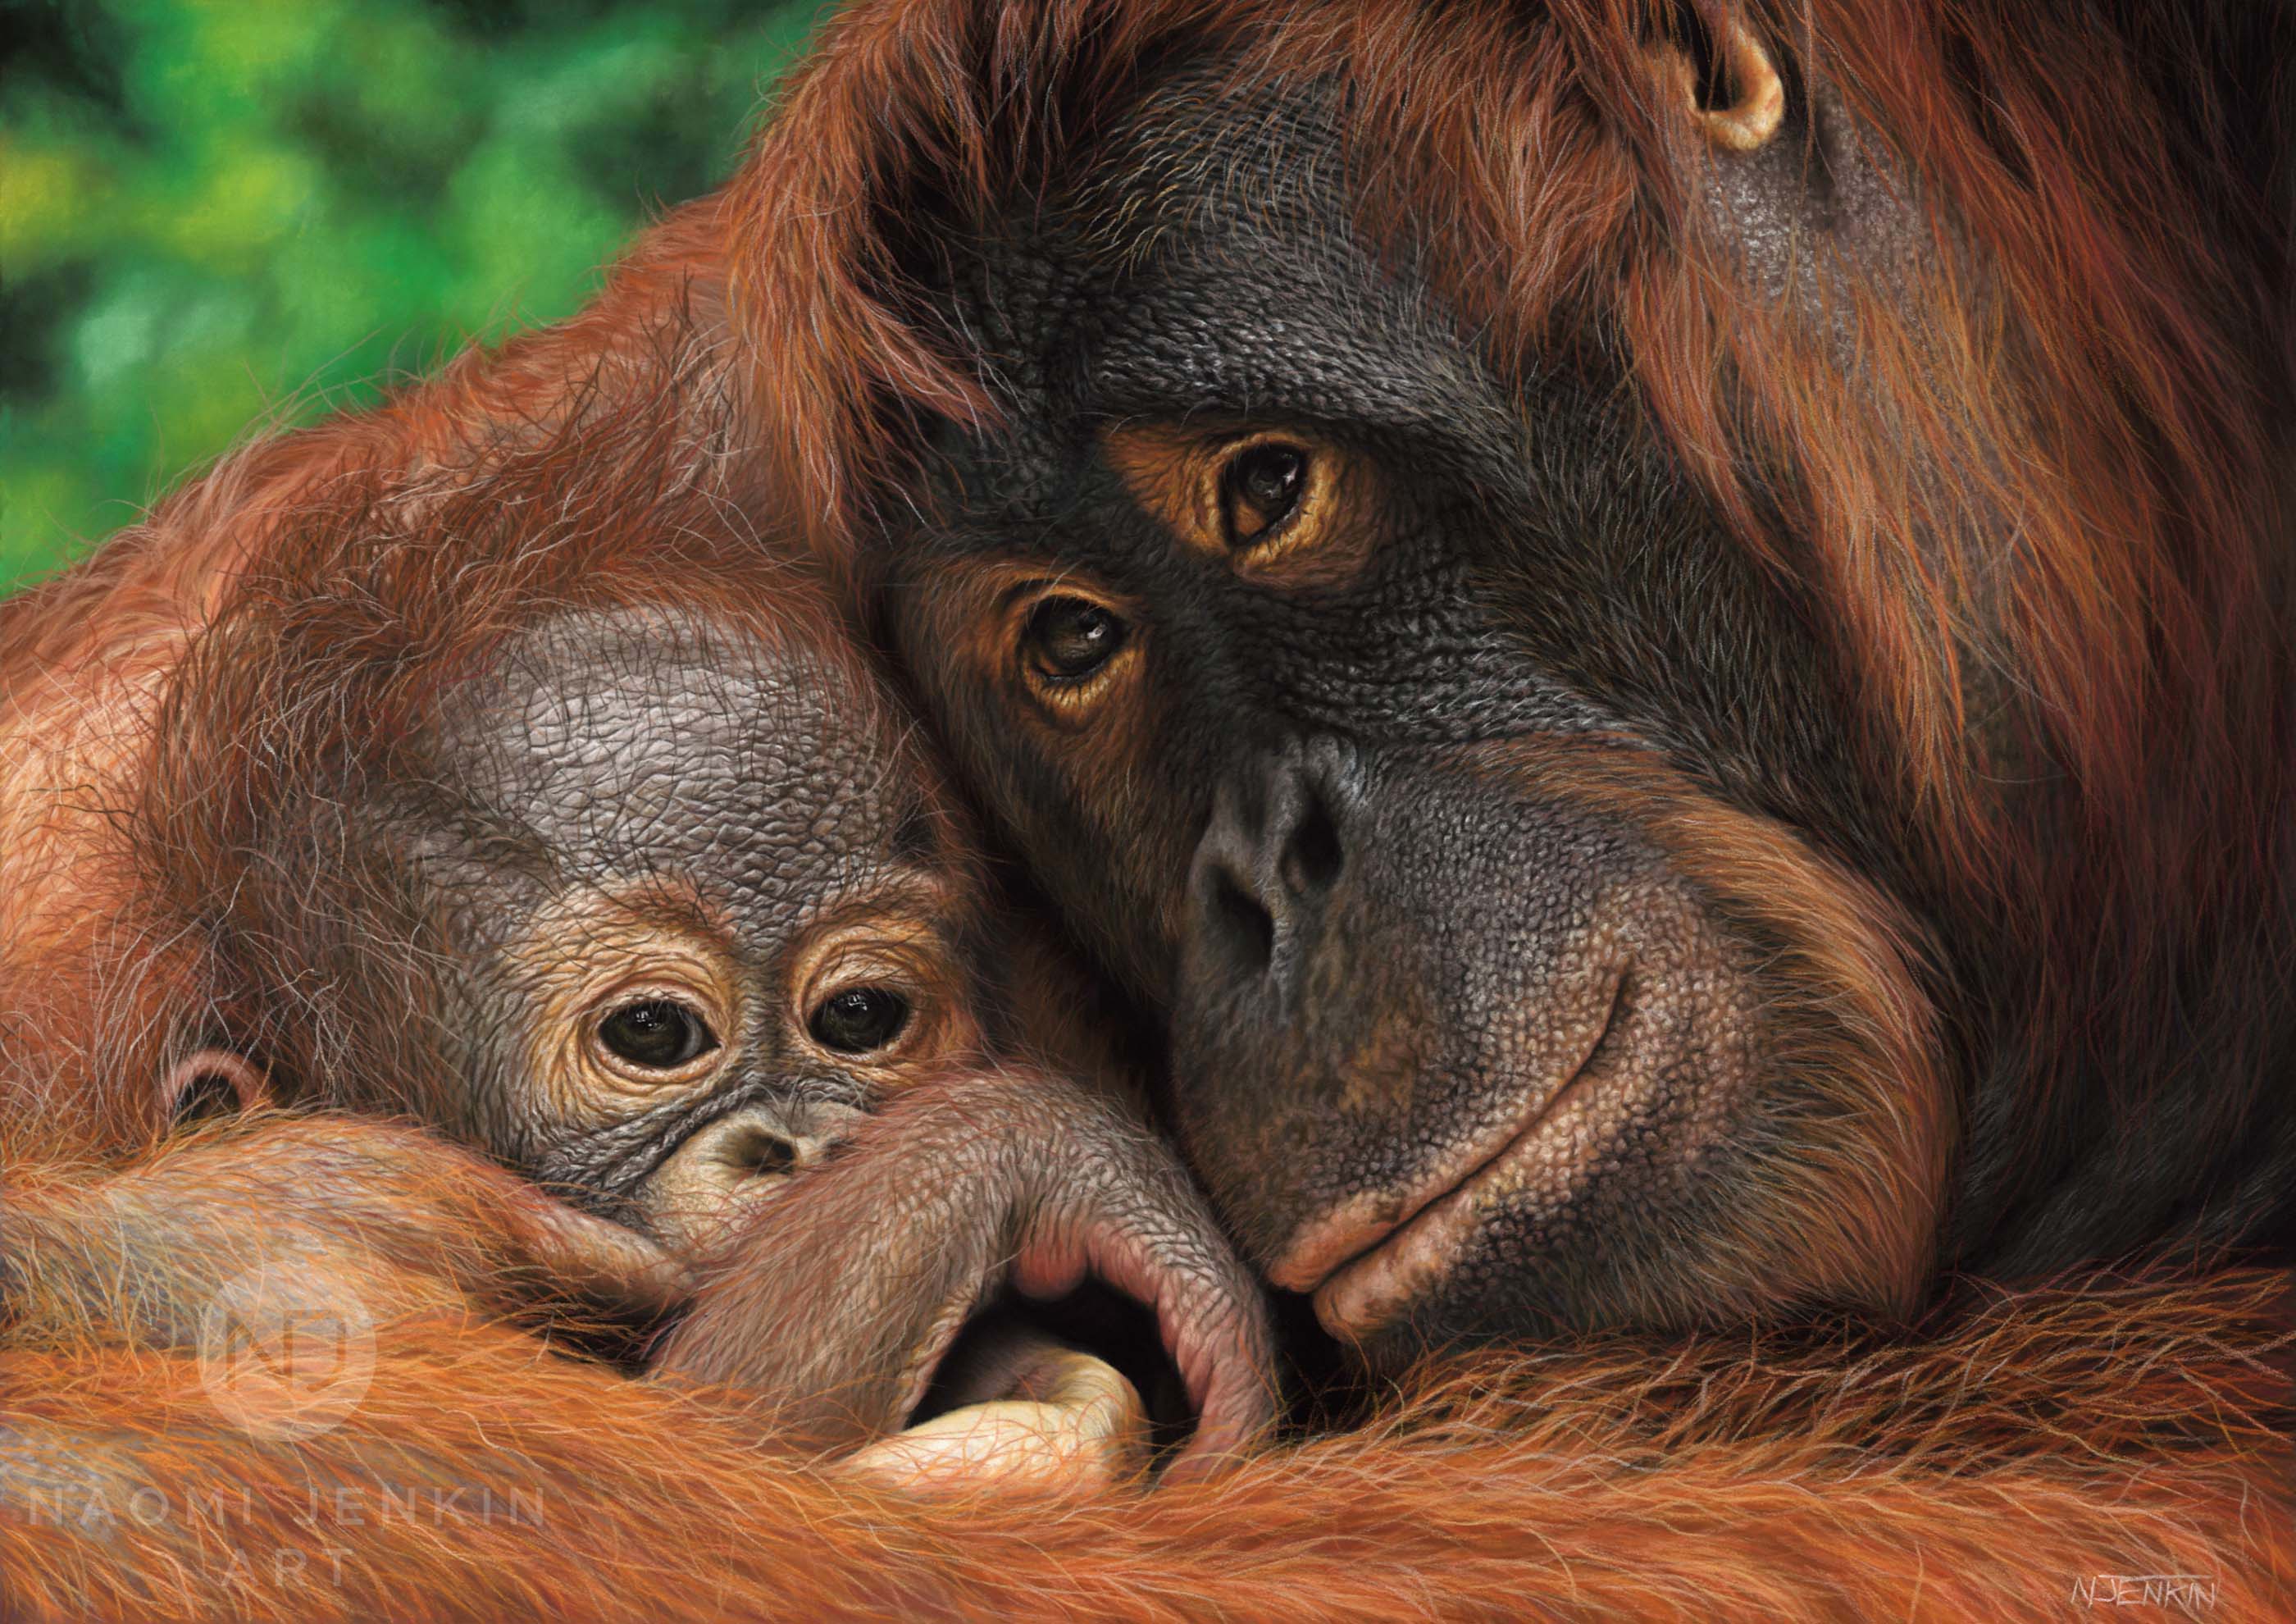 Bornean orangutan painting by wildlife artist Naomi Jenkin.